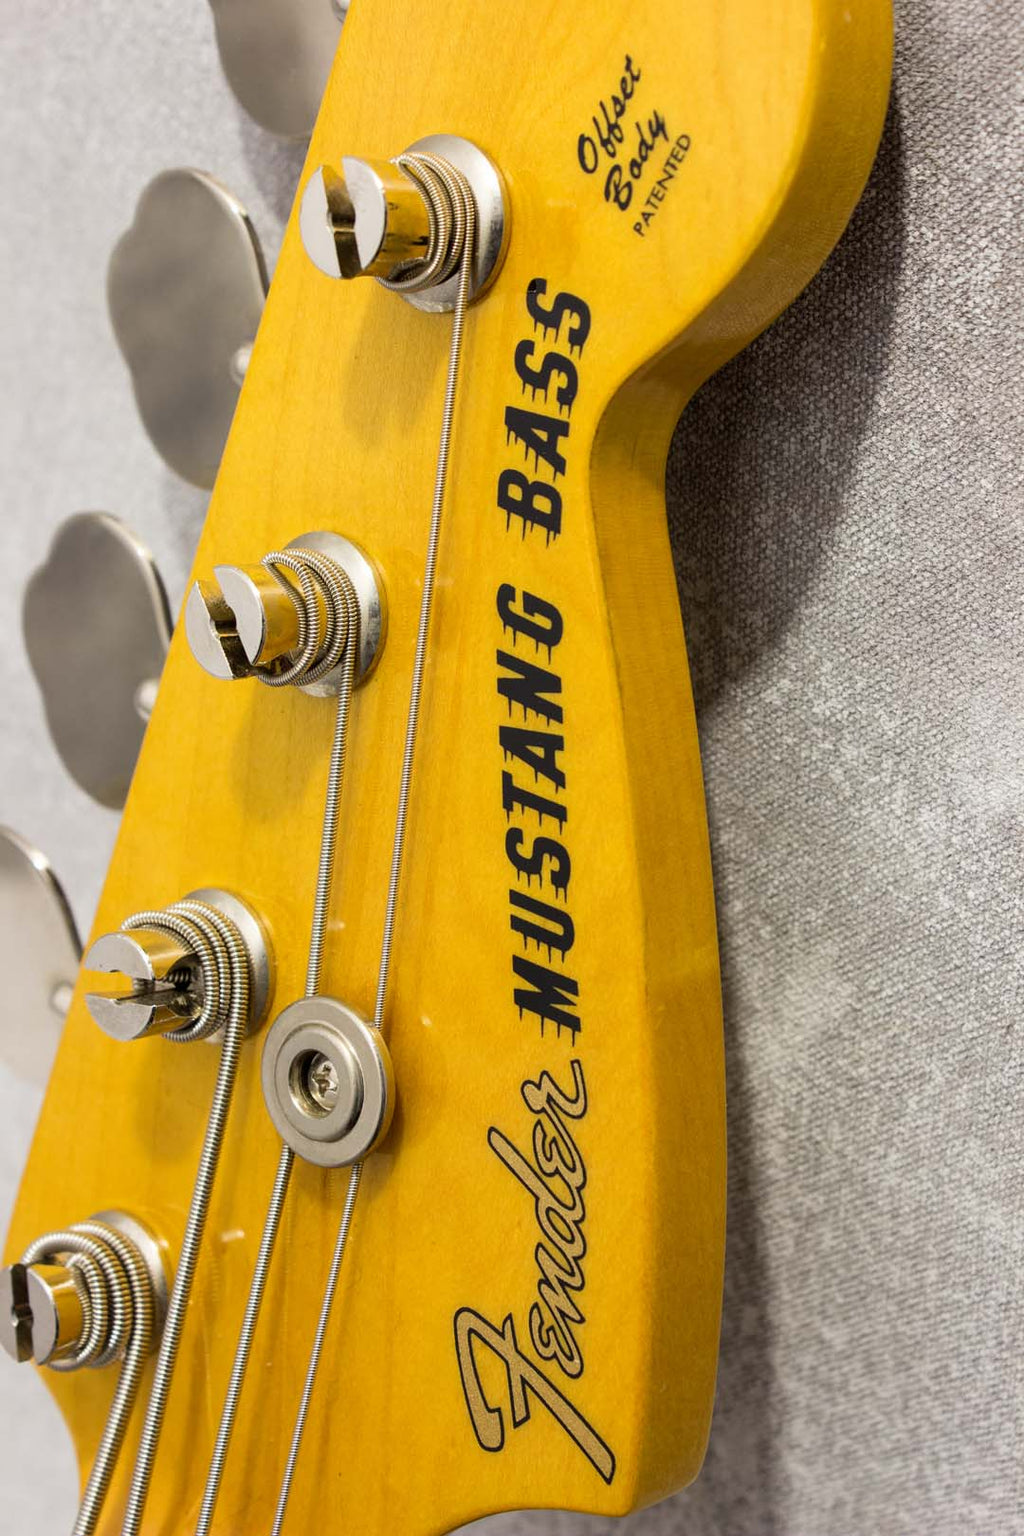 Fender Japan Mustang Bass MB98-SD Black 2003